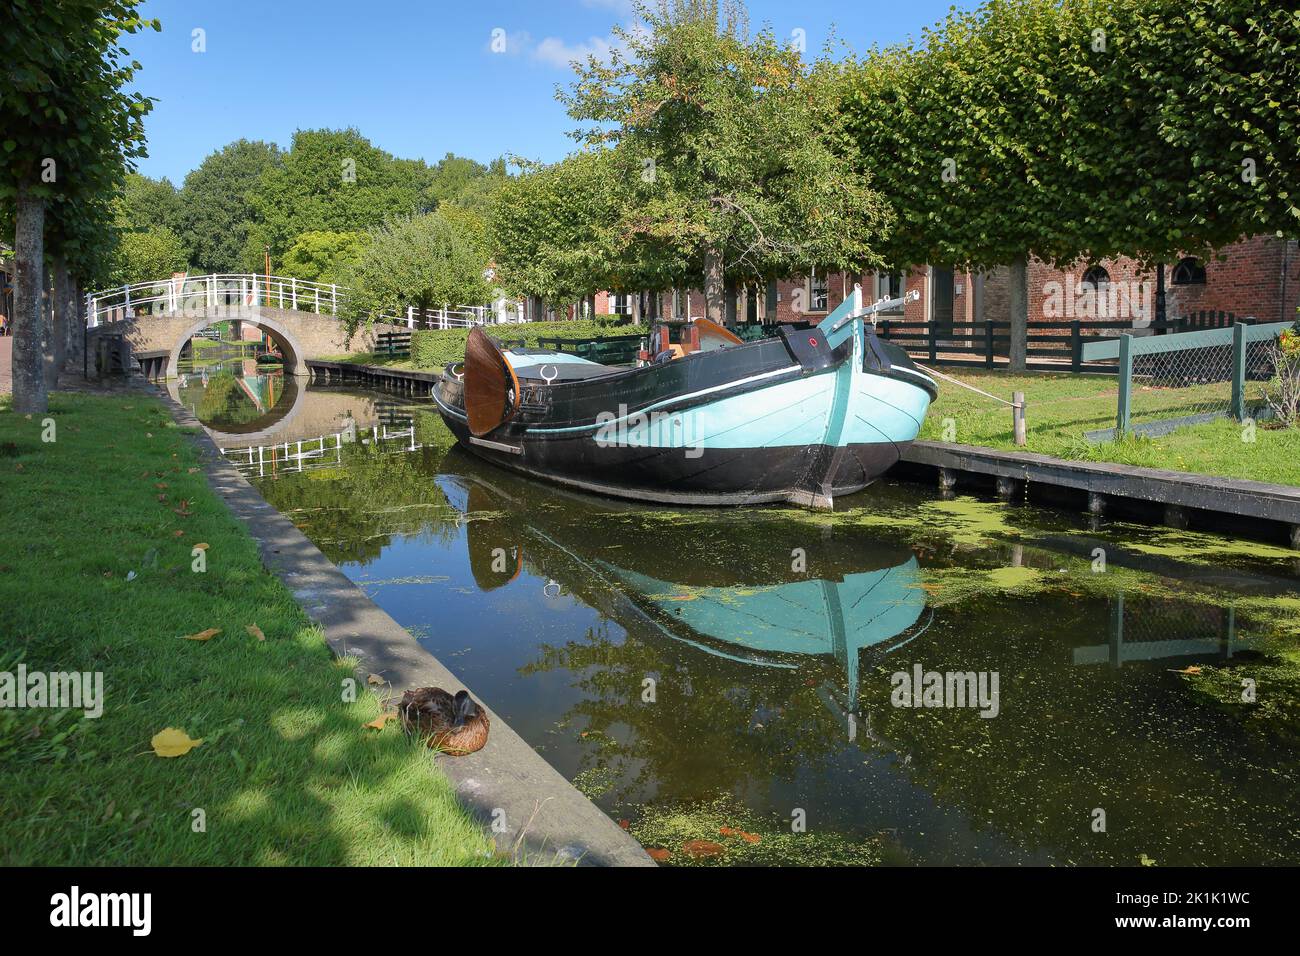 ENKHUIZEN, NETHERLANDS - SEPTEMBER 11, 2022: Zuiderzeemuseum, an open air museum on the shore of Ijsselmeer, with canals, boats and bridges Stock Photo